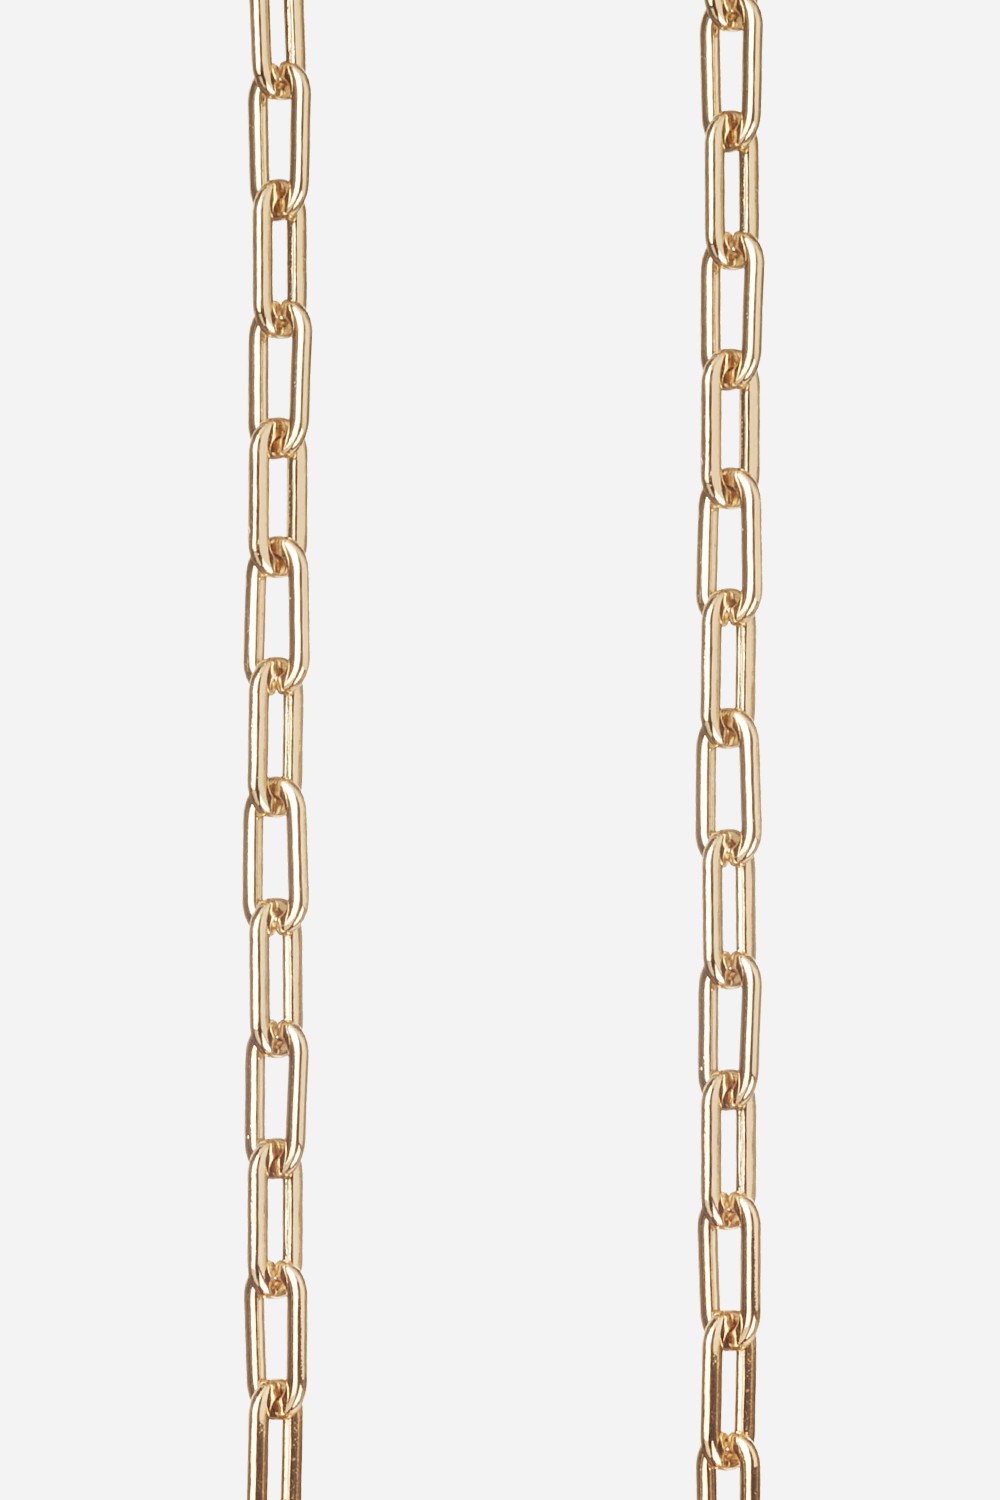 Mia Gold Long Chain 120 cm